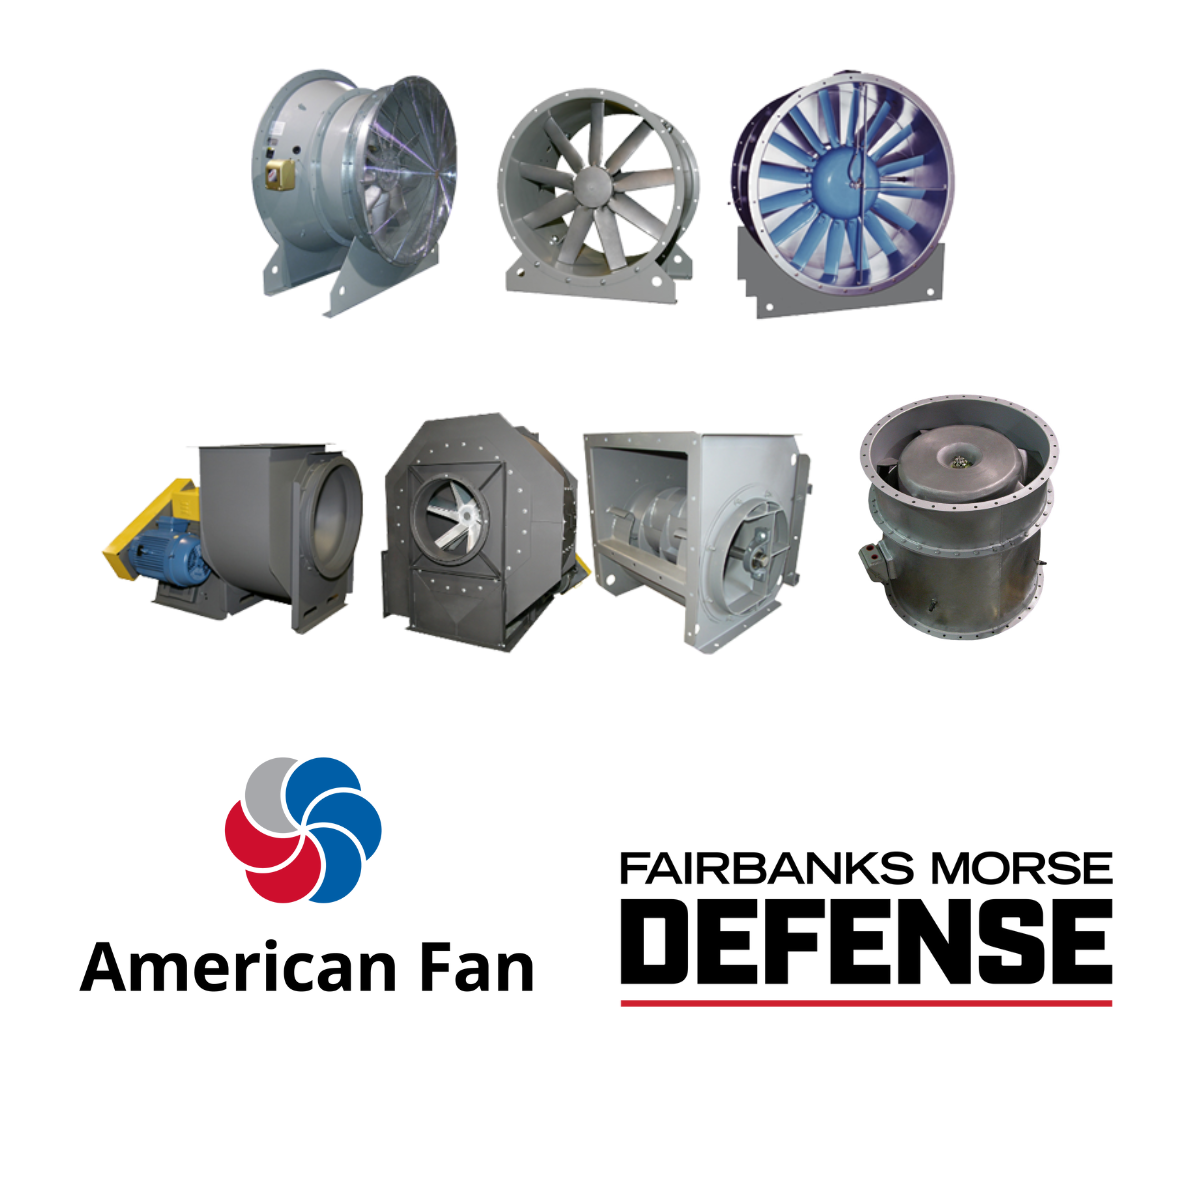 Fairbanks Morse Defense Expands Product Portfolio With American Fan Acquisition